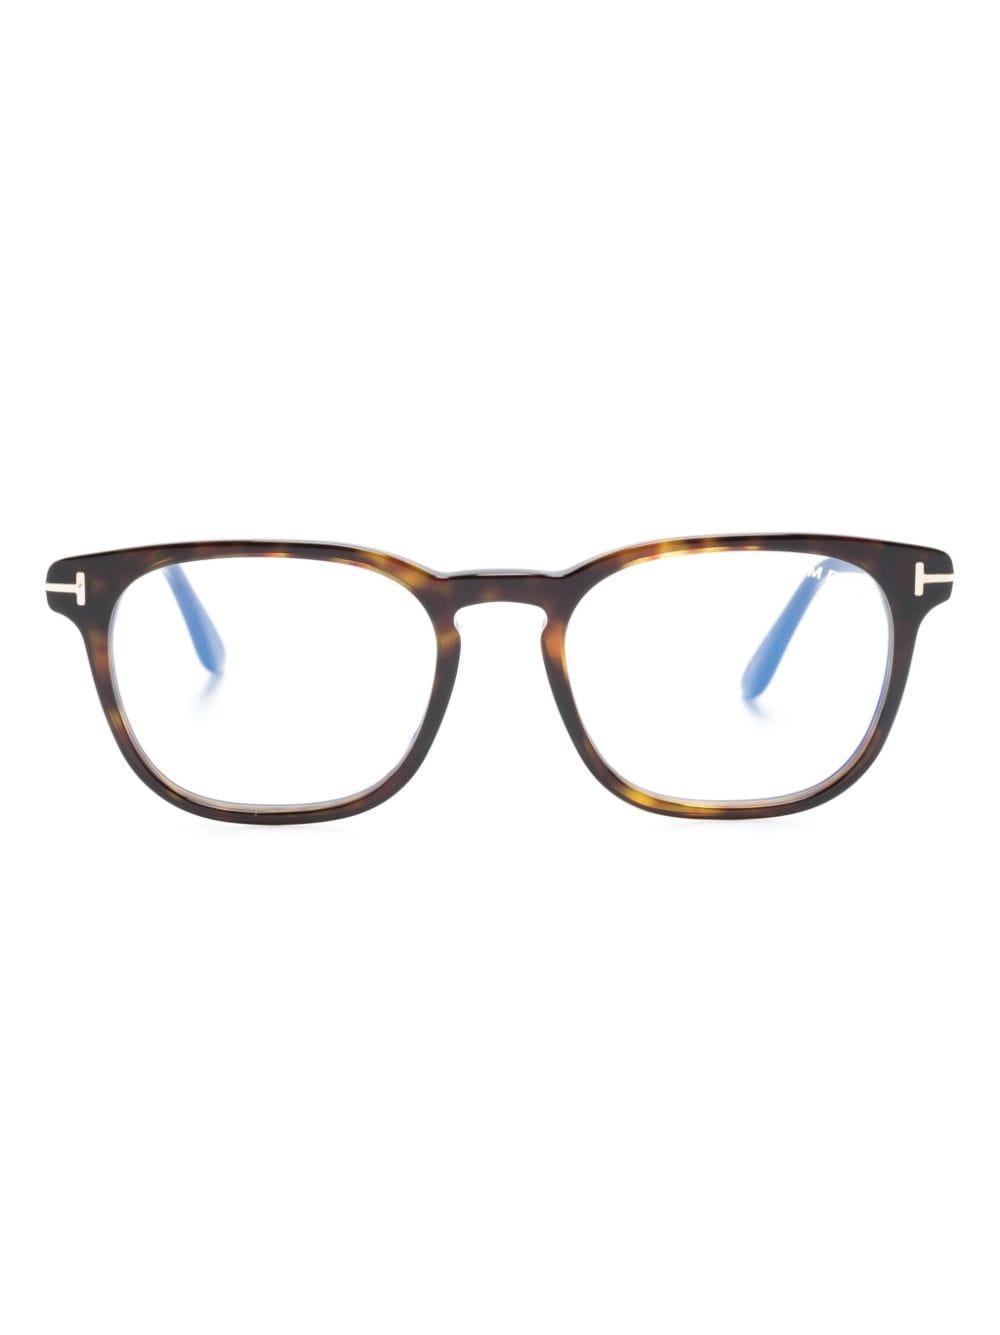 TOM FORD Eyewear Blue Block square-frame glasses - Brown von TOM FORD Eyewear